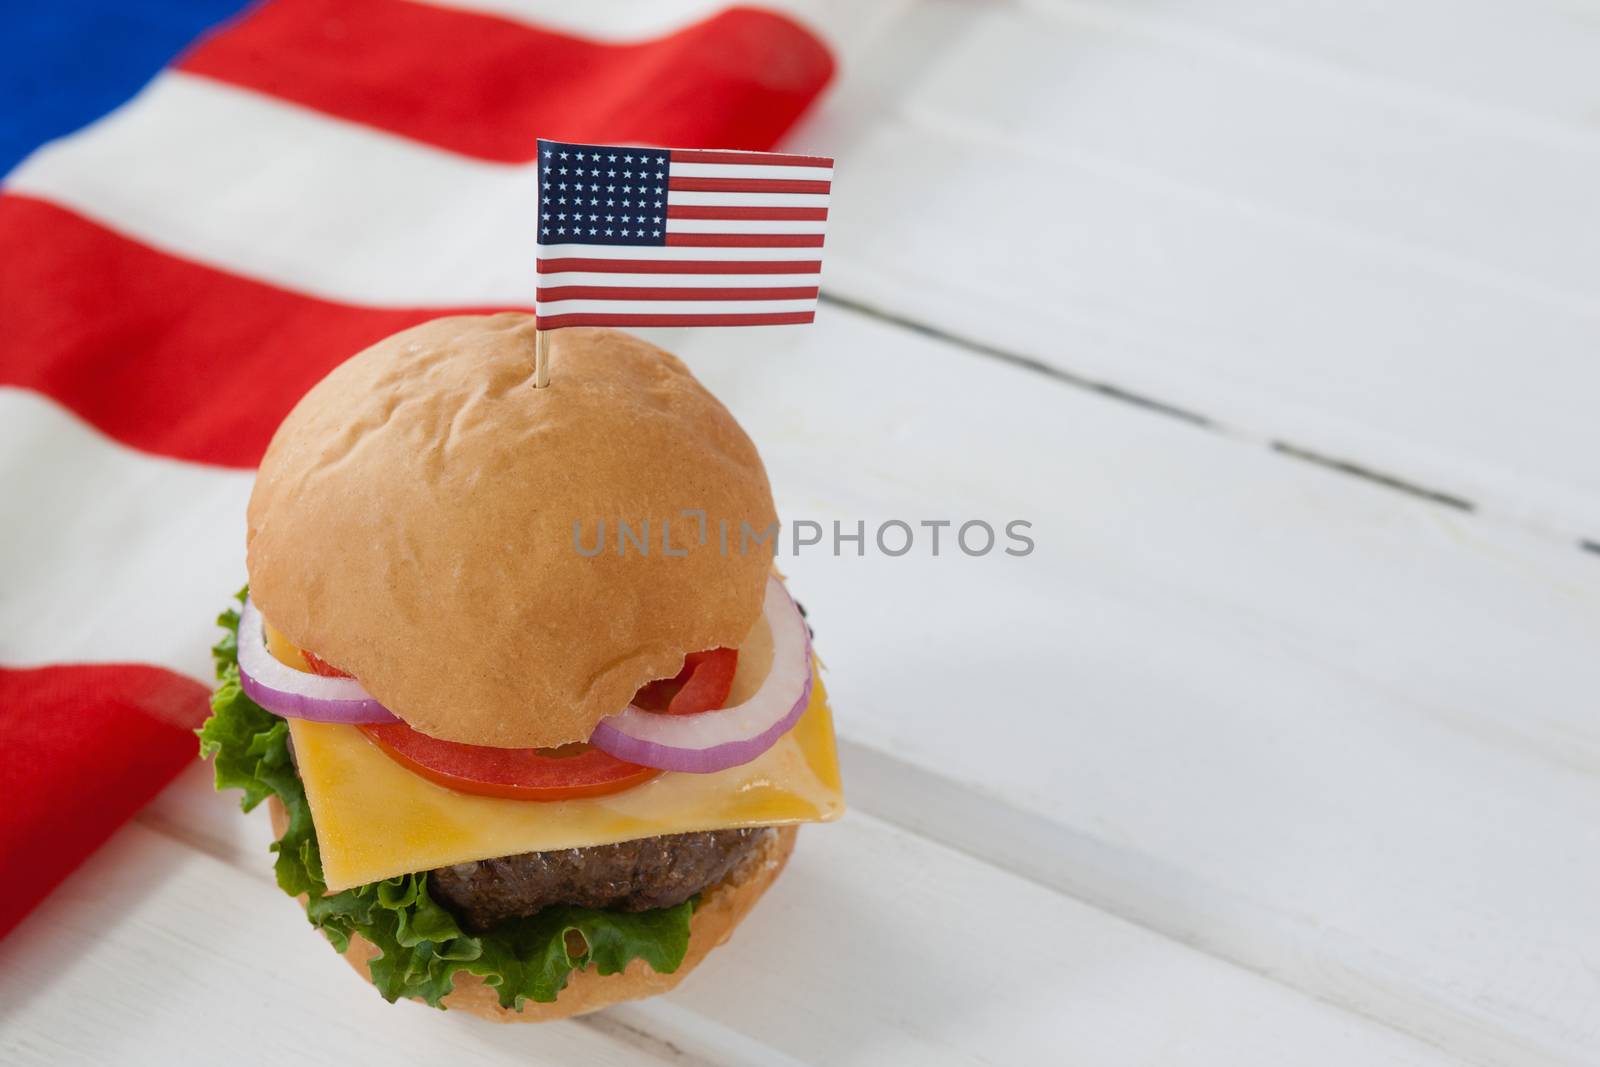 Hamburger with 4th july theme by Wavebreakmedia